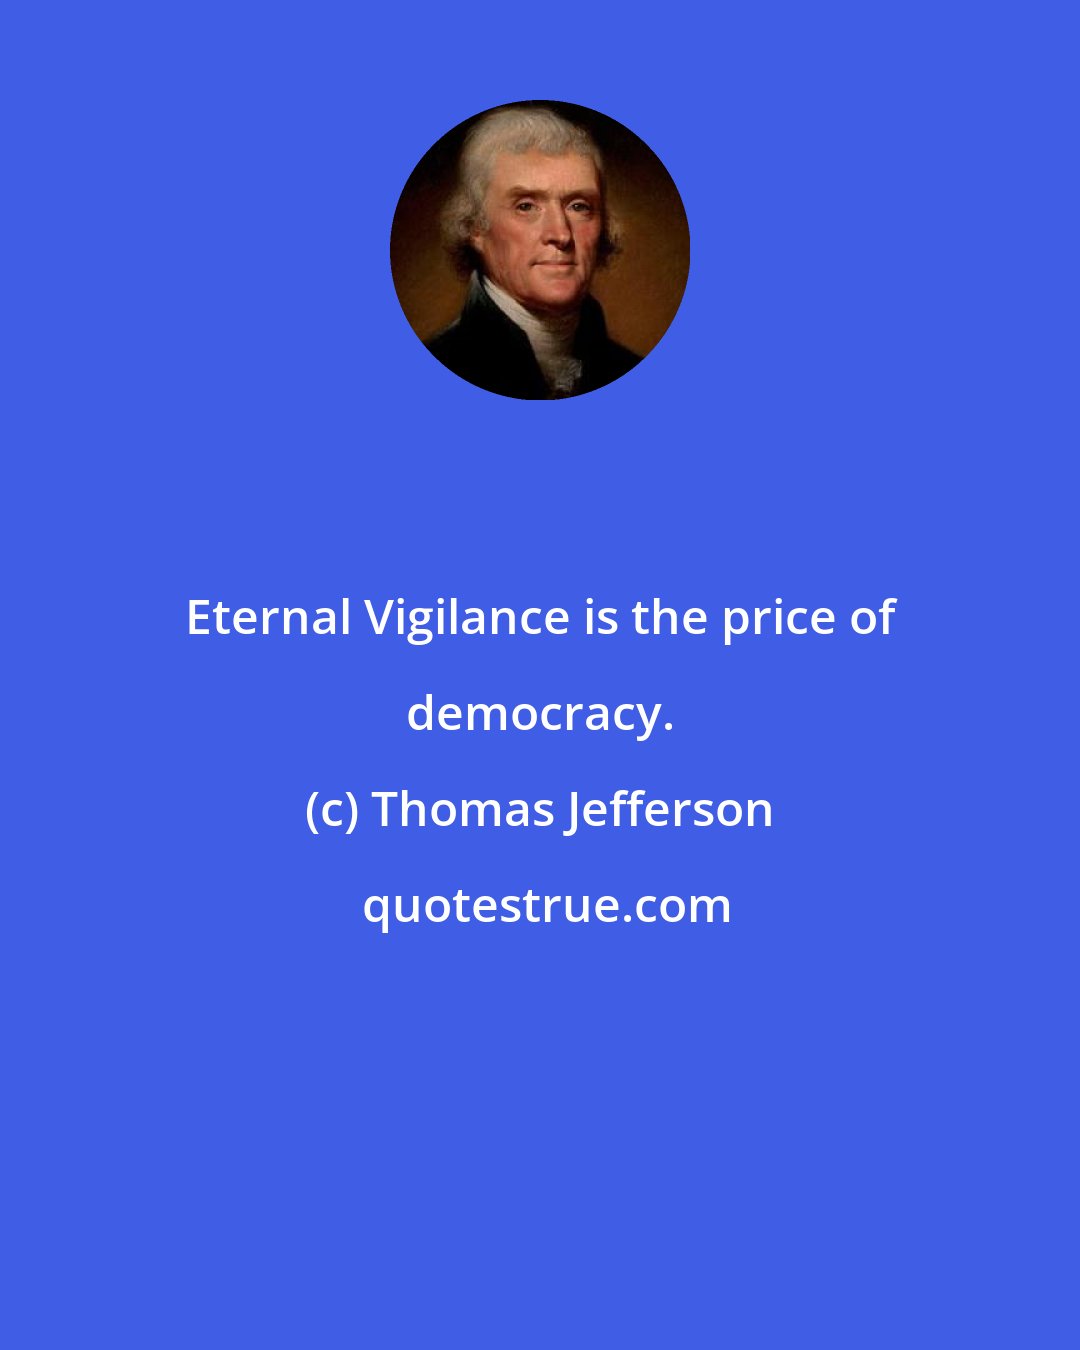 Thomas Jefferson: Eternal Vigilance is the price of democracy.